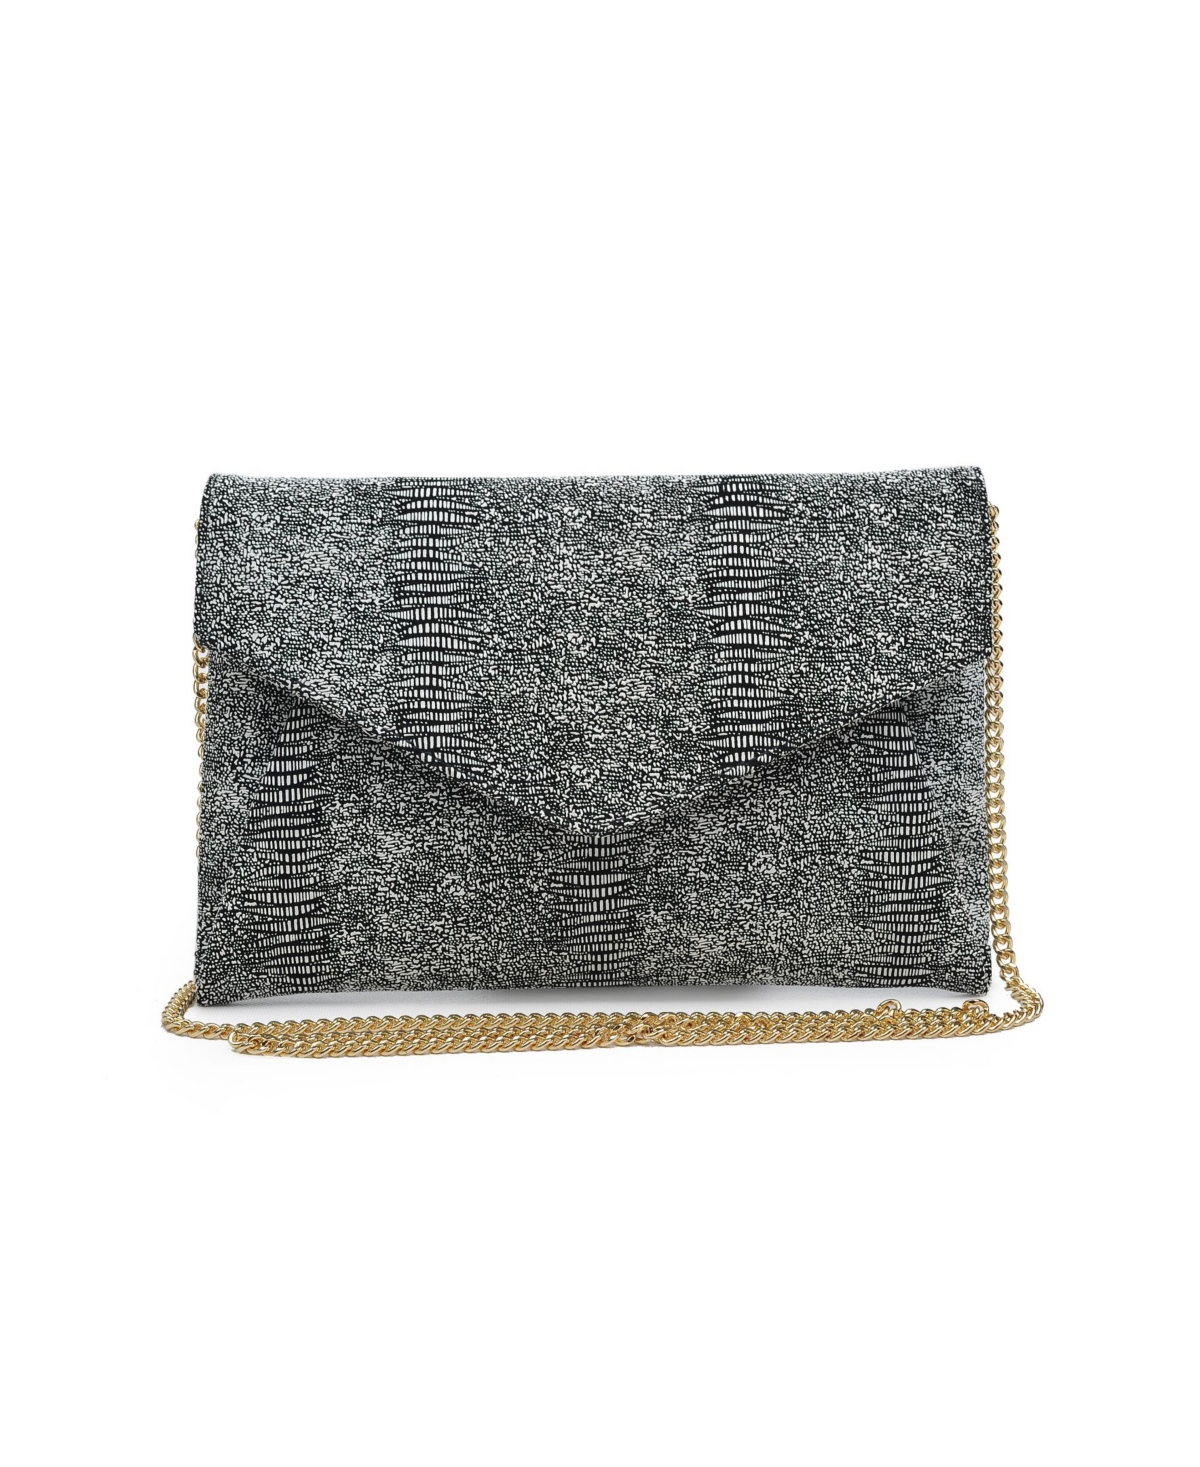 Moda Luxe” Ladies Black Clutch Purse/Envelope Style Handbag